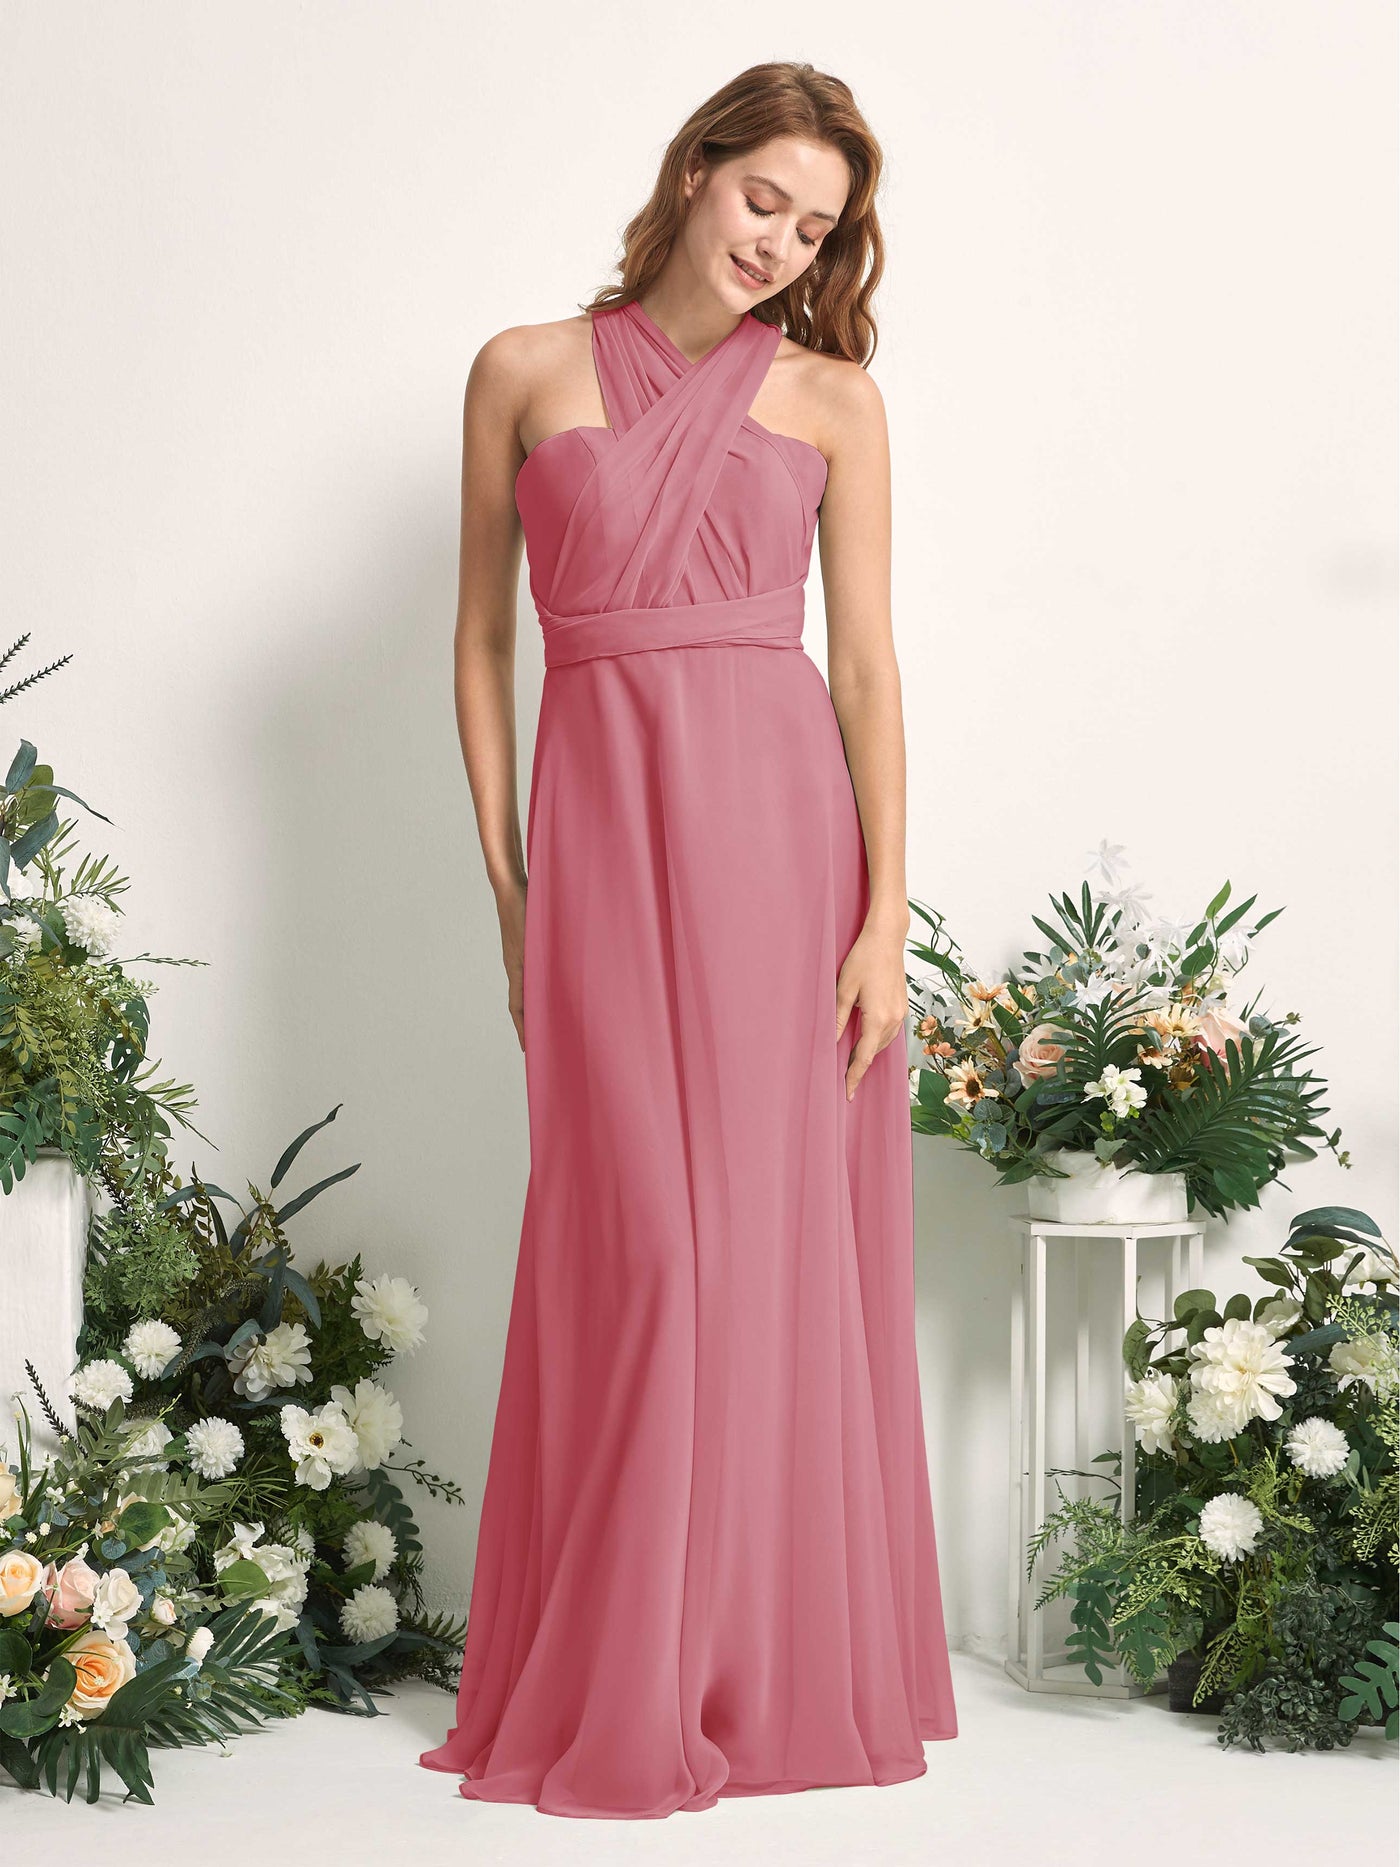 Desert Rose Bridesmaid Dresses Bridesmaid Dress A-line Chiffon Halter Full Length Short Sleeves Wedding Party Dress (81226311)#color_desert-rose